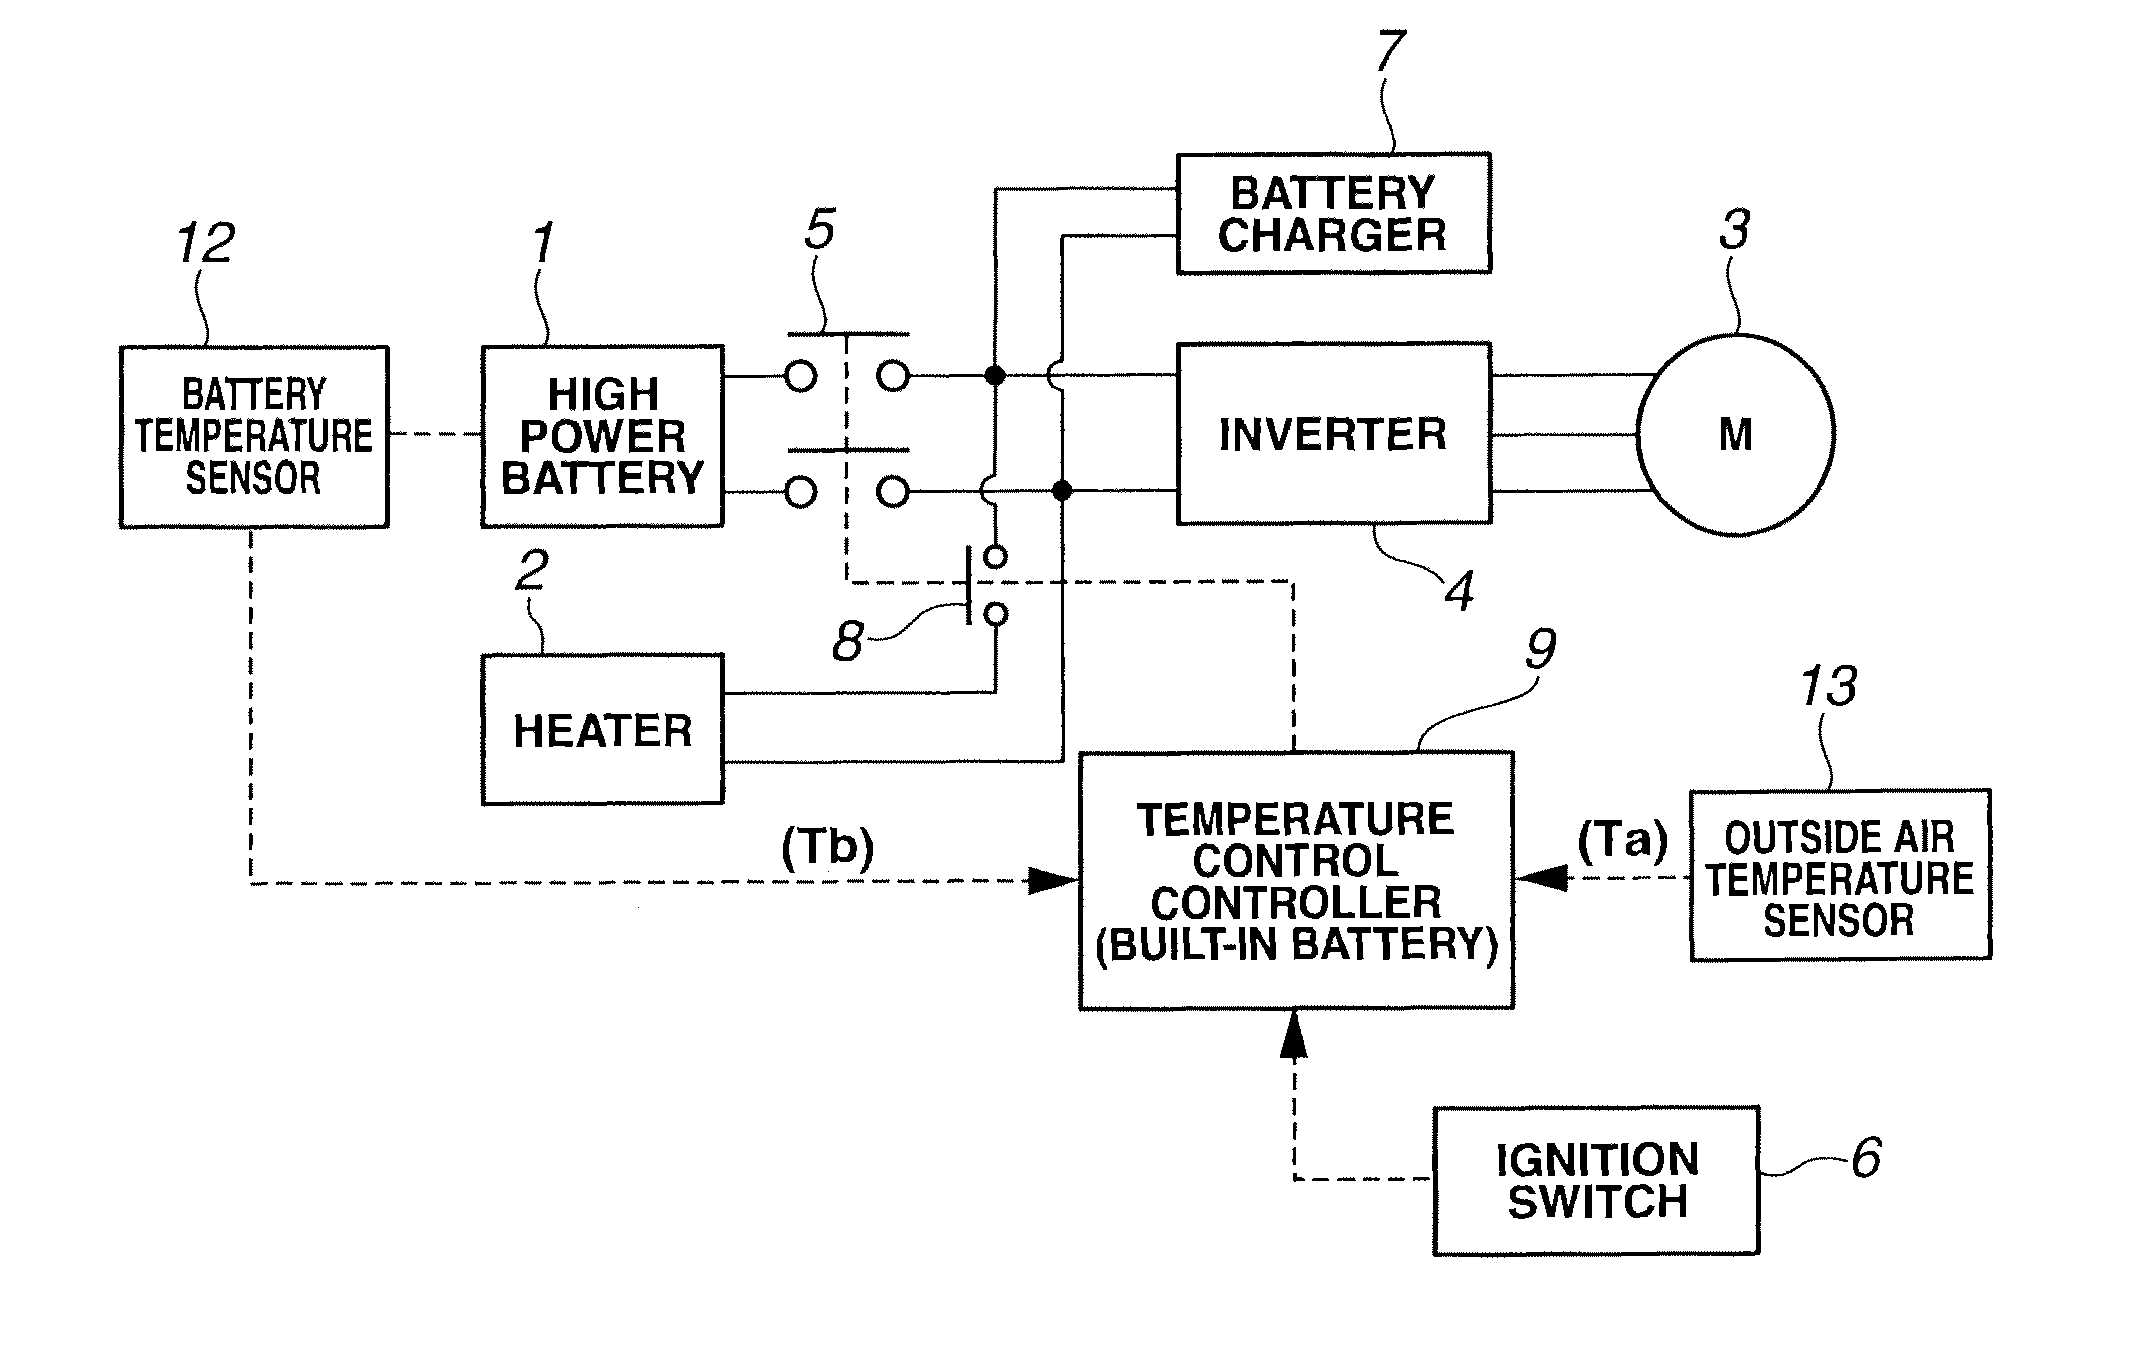 Battery temperature control device